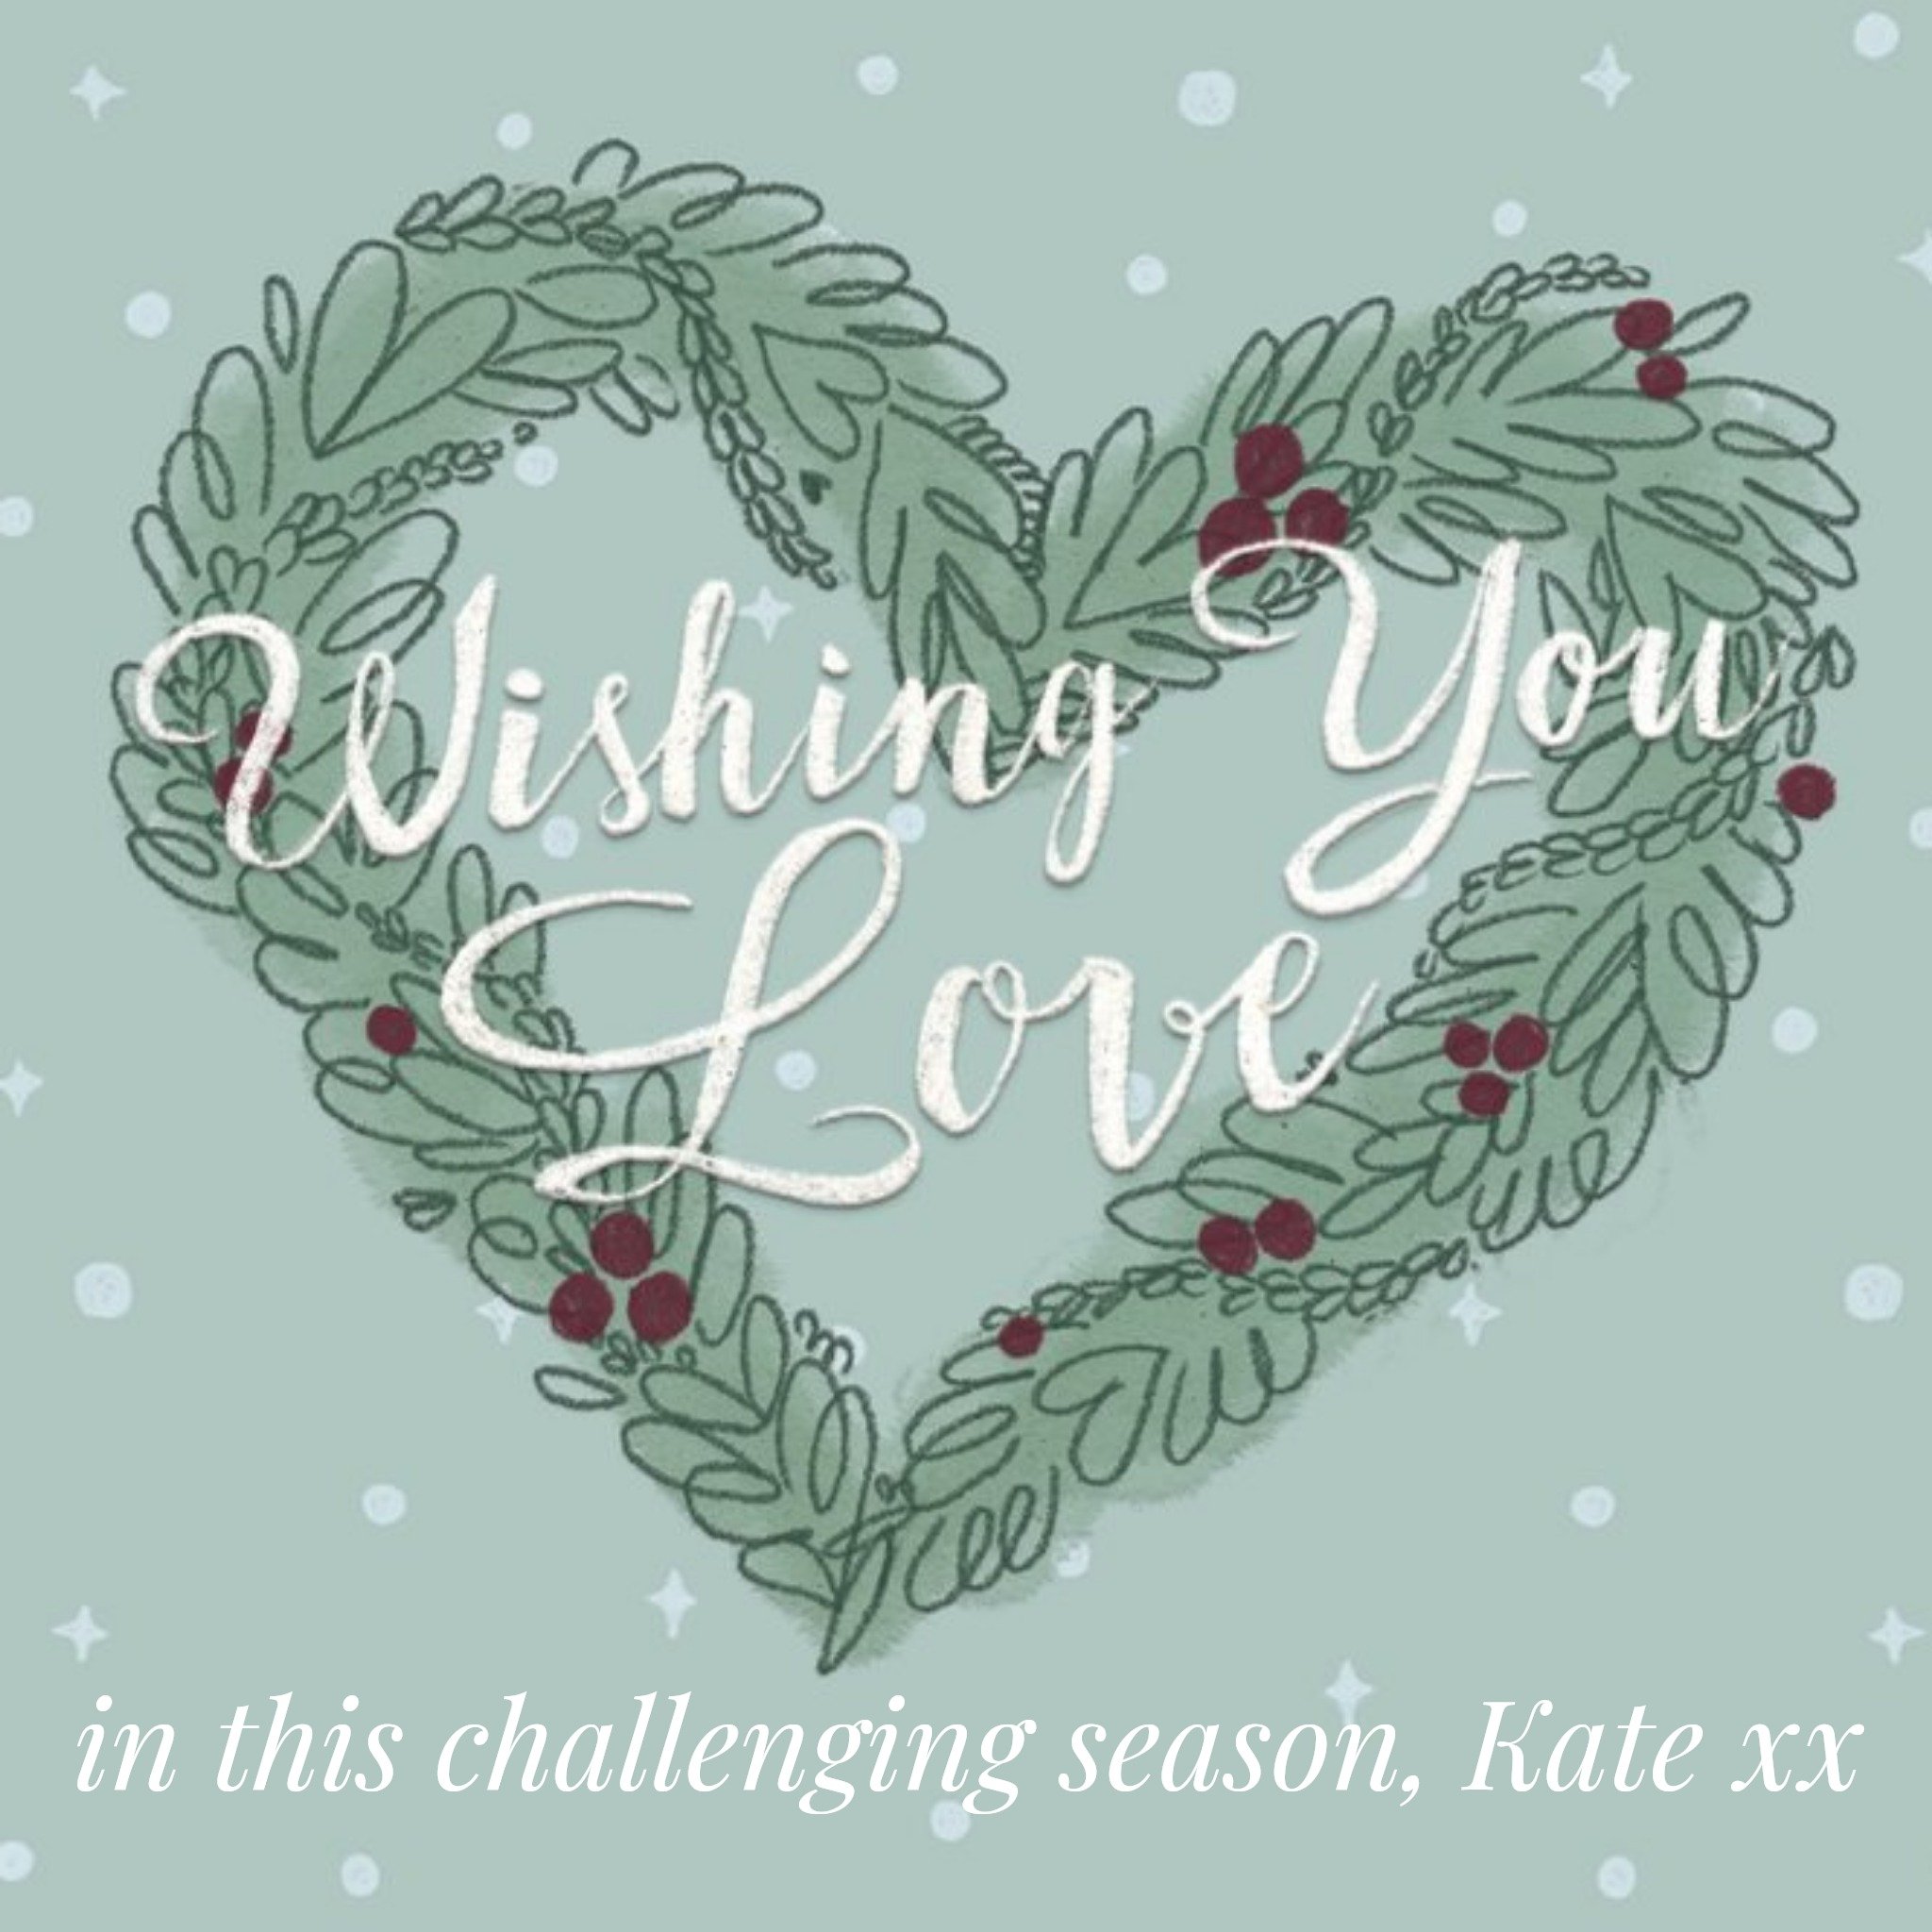 Moonpig Wishing You Love Love Heart Christmas Reef Card, Large